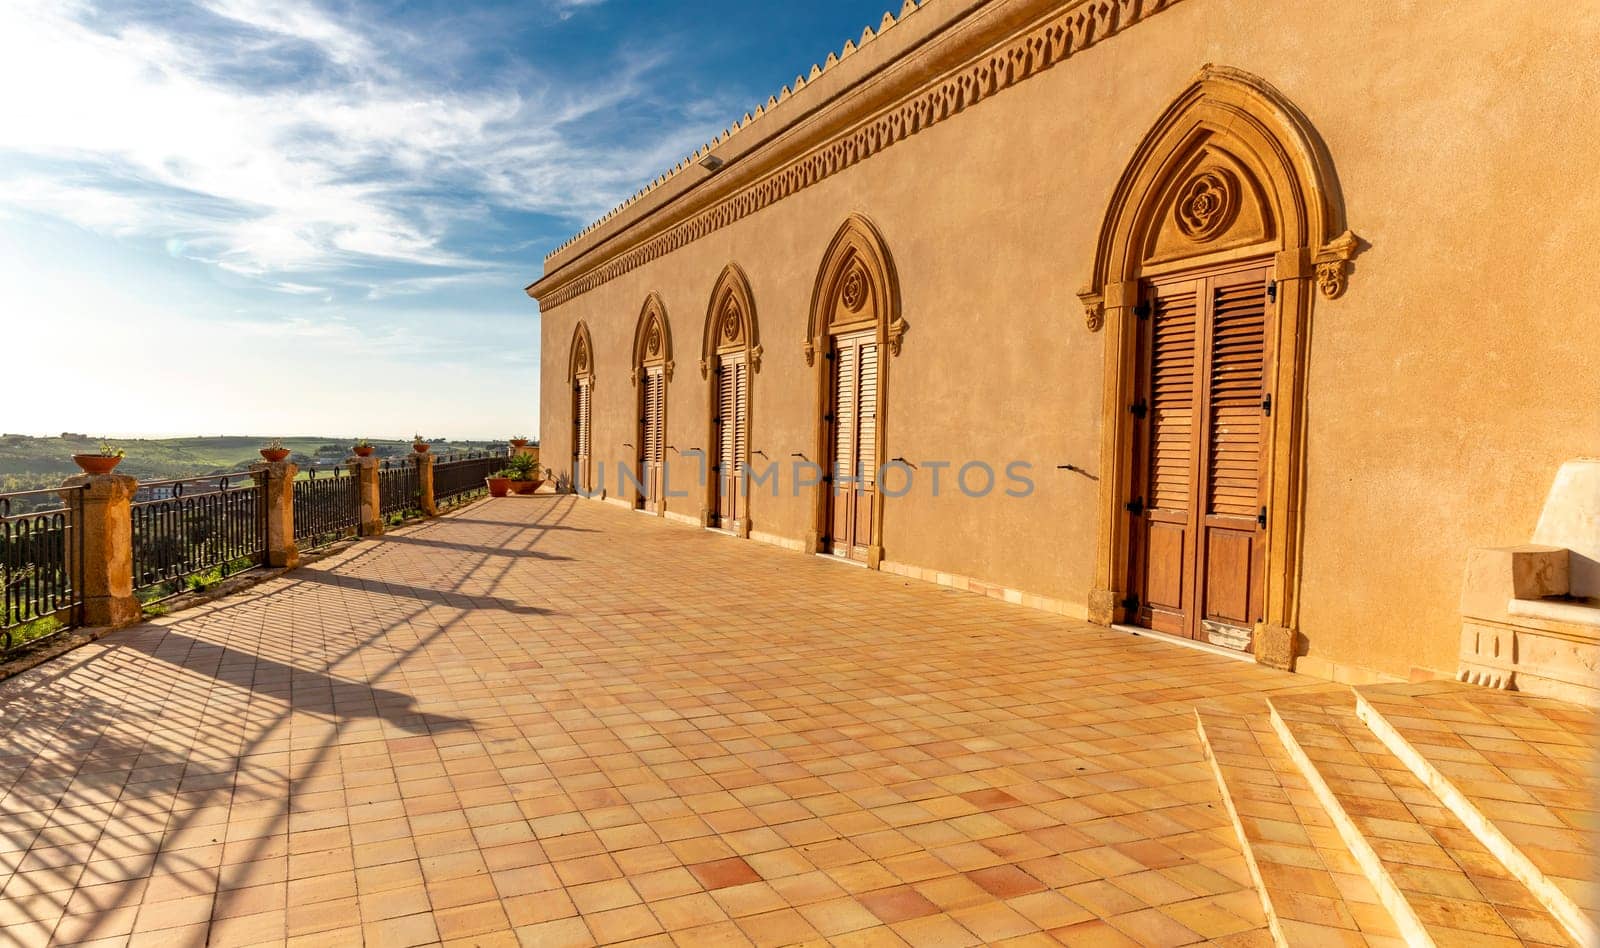 Amazing view from balcony of Villa Aurea, Agrigento, Sicily, Italy by EdVal